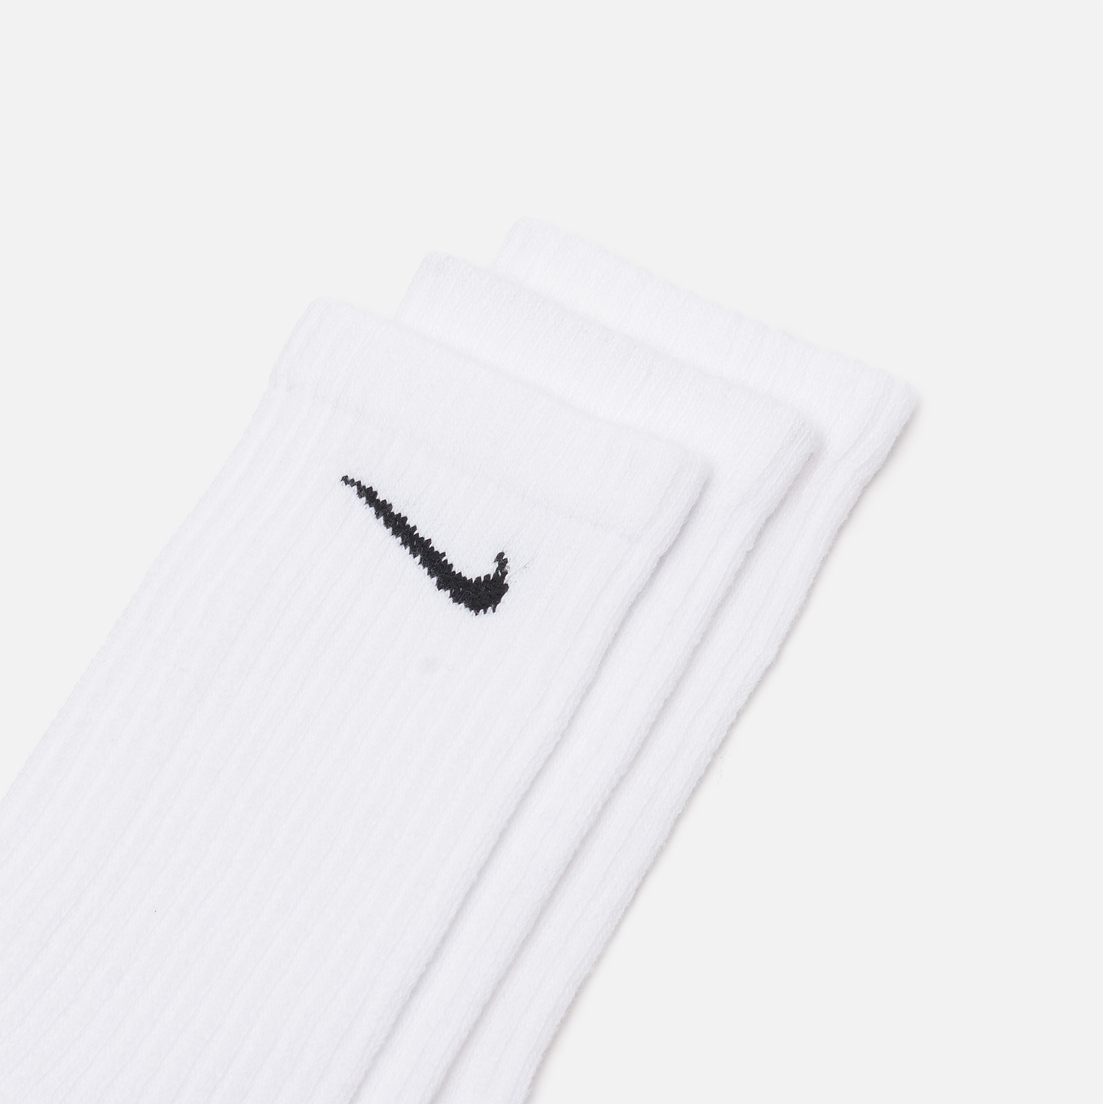 Nike Комплект носков 3-Pack Everyday Cushioned Crew